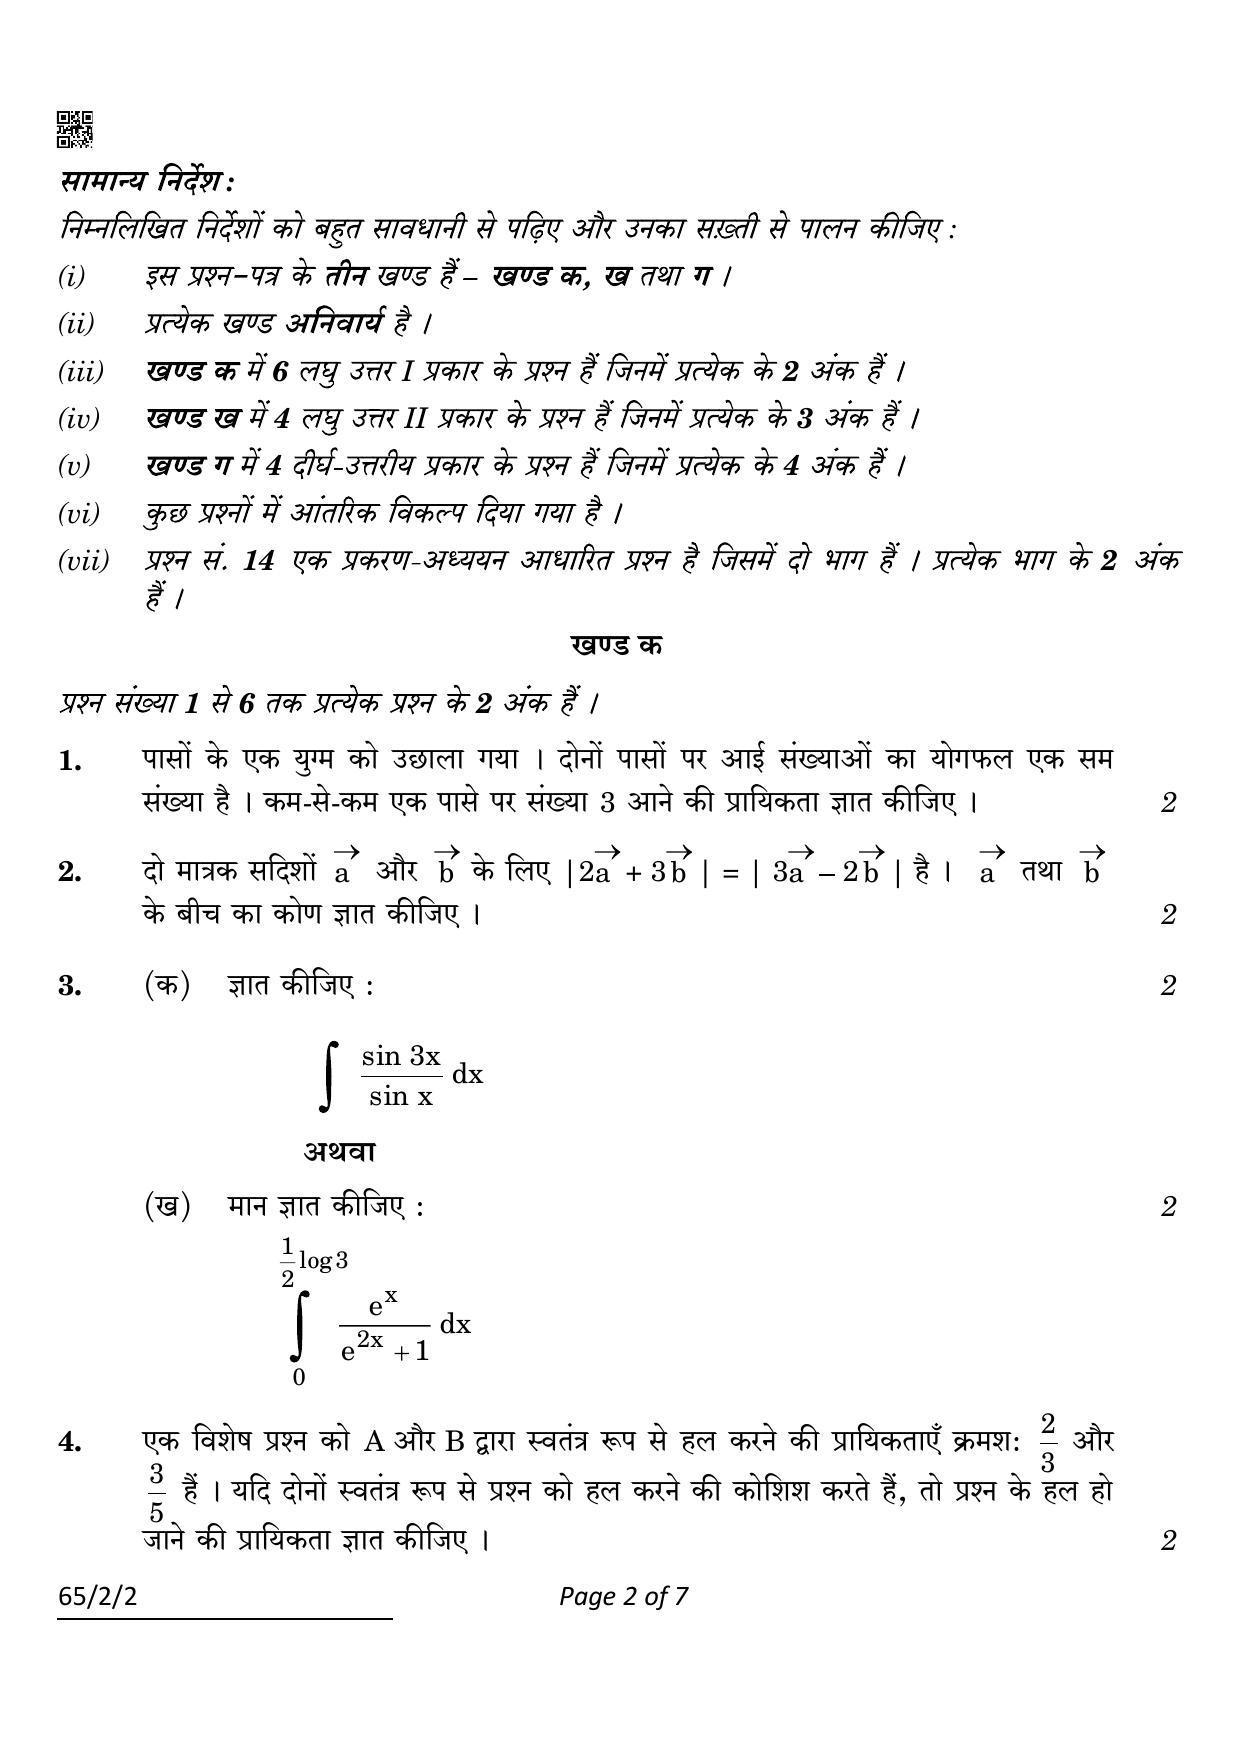 CBSE Class 12 65-2-2 Mathematics 2022 Question Paper - Page 2